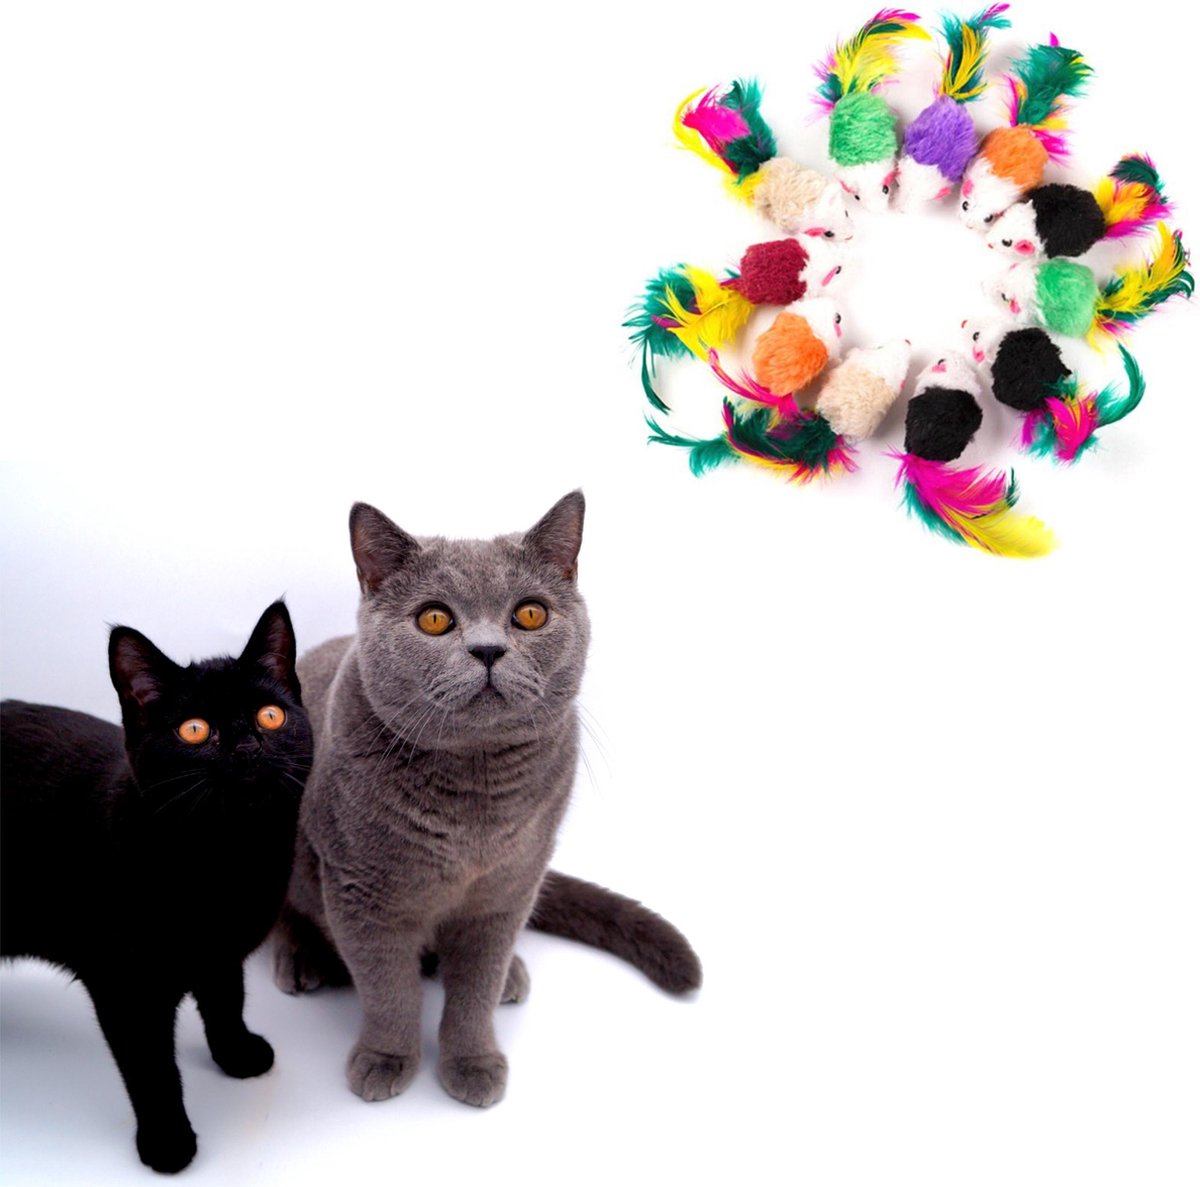 Make Me Purr Fluffy Muizen met Veer - Kattenspeeltjes - Kattenspeelgoed - Speelgoed voor Katten - Kat Speeltje Muis - Kitten Speeltjes Muisjes - 10 Stuks - Make Me Purr